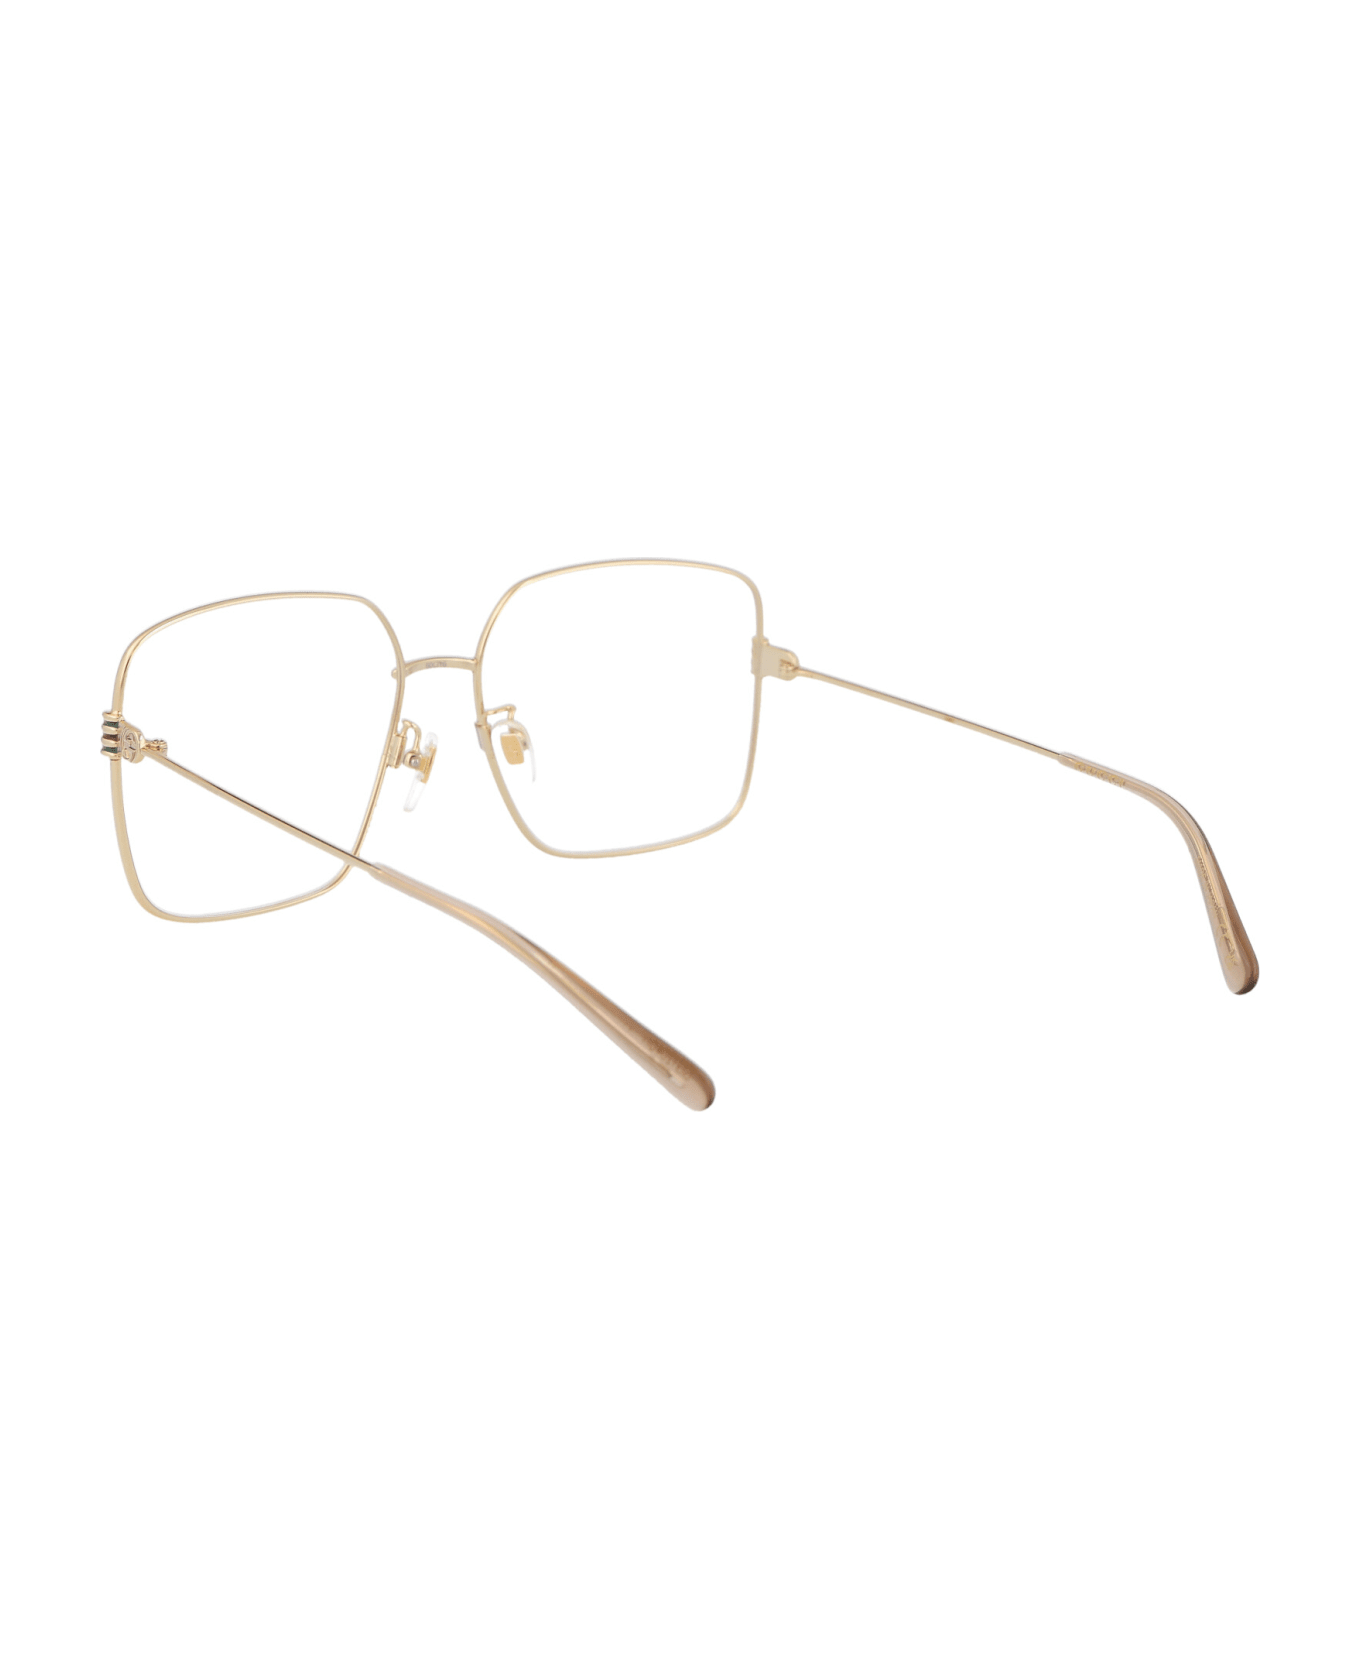 Gucci Eyewear Gg1284oa Glasses - 001 GOLD GOLD TRANSPARENT